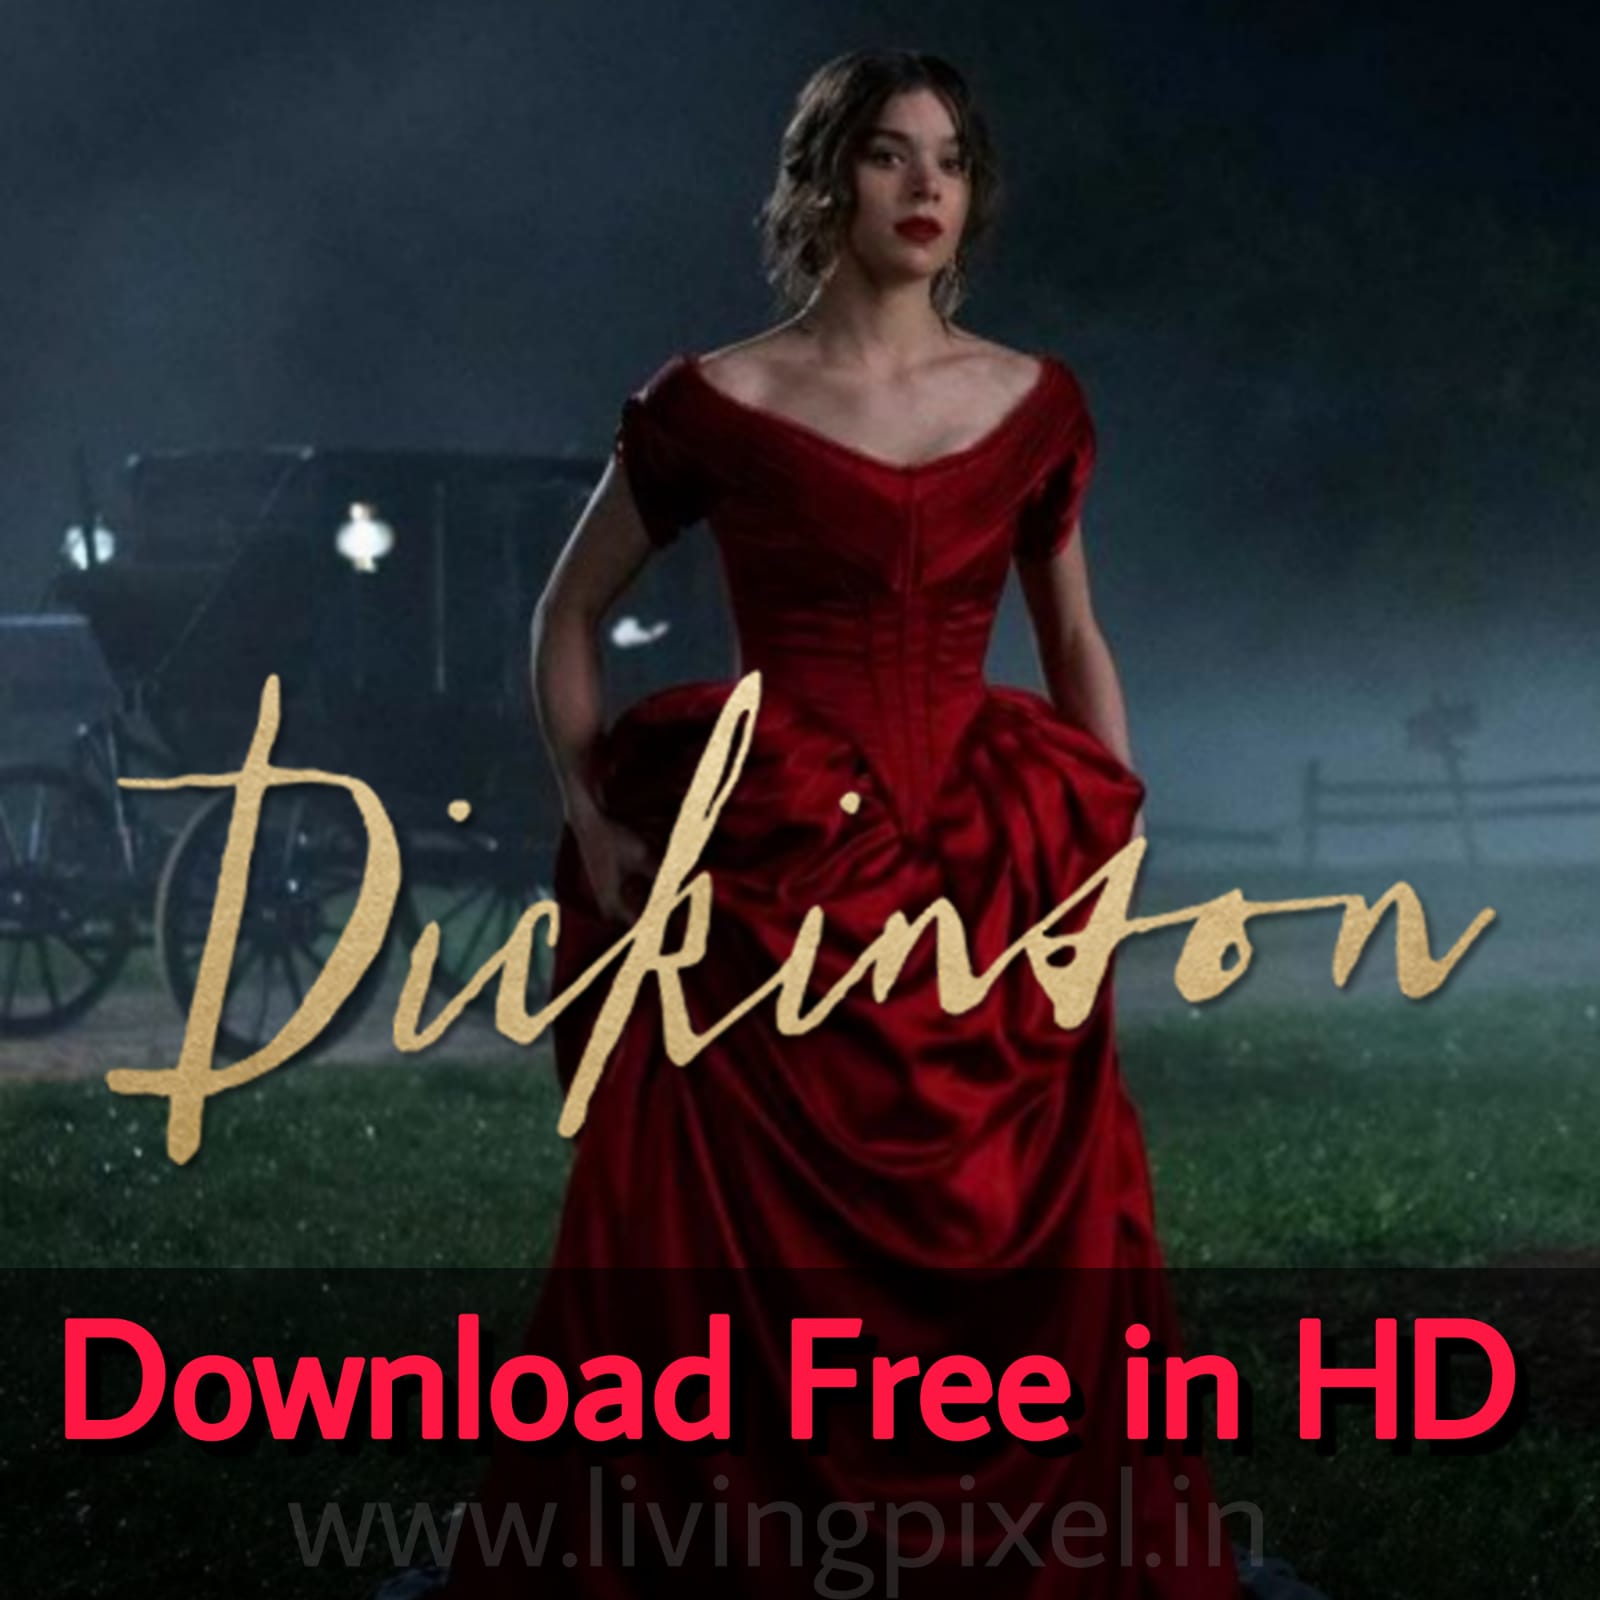 Dickinson television series download telegram link thumb